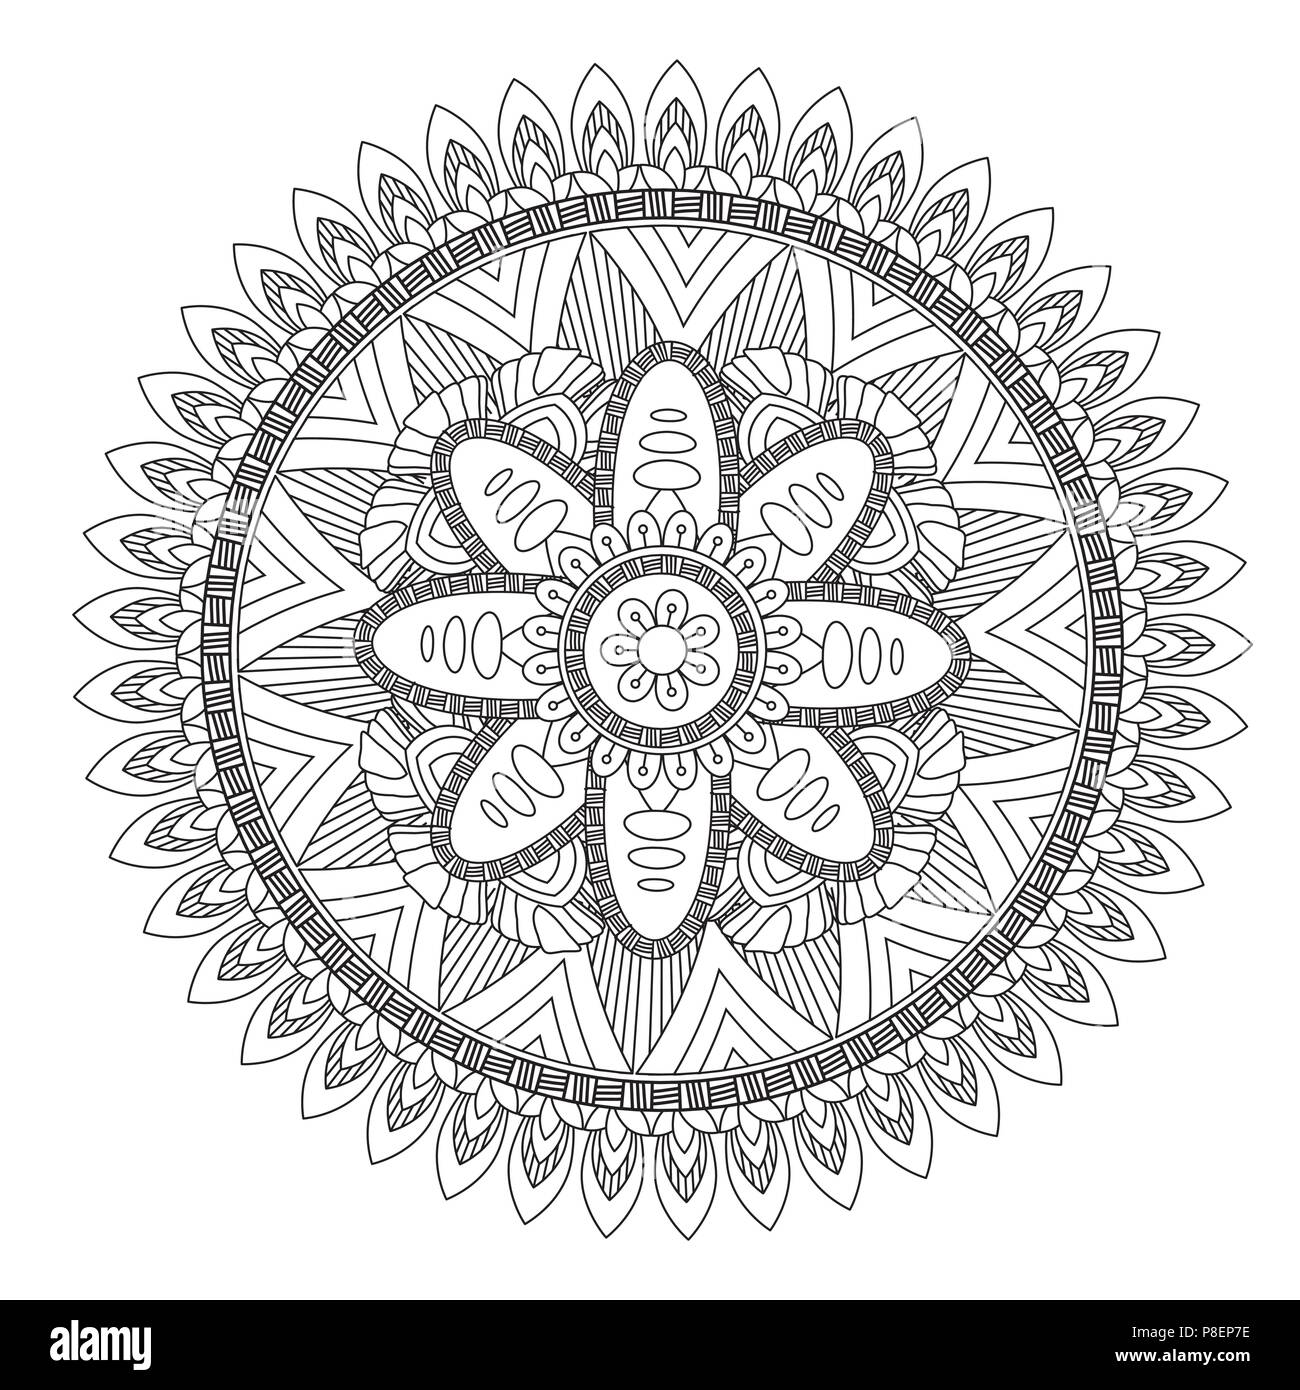 Flower Mandala vector illustration. Oriental pattern, vintage decorative elements. Islam, Arabic, Indian, moroccan, turkish ottoman motifs Coloring page Stock Vector